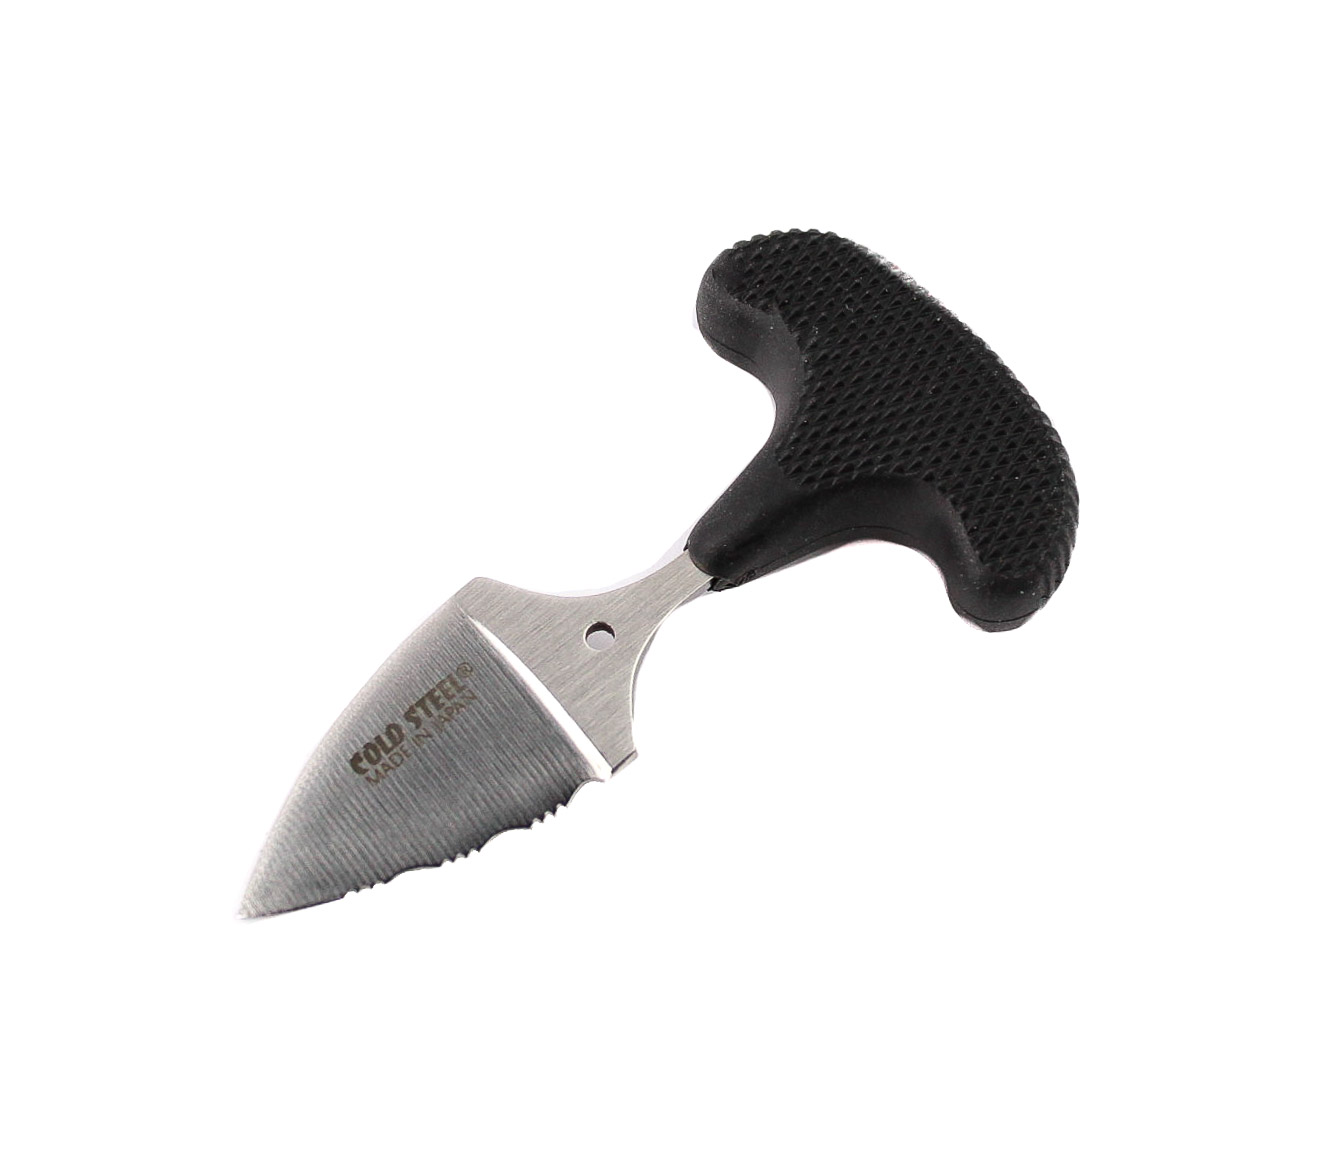 Нож Cold Steel Mini Pal сталь AUS8A рукоять кратон